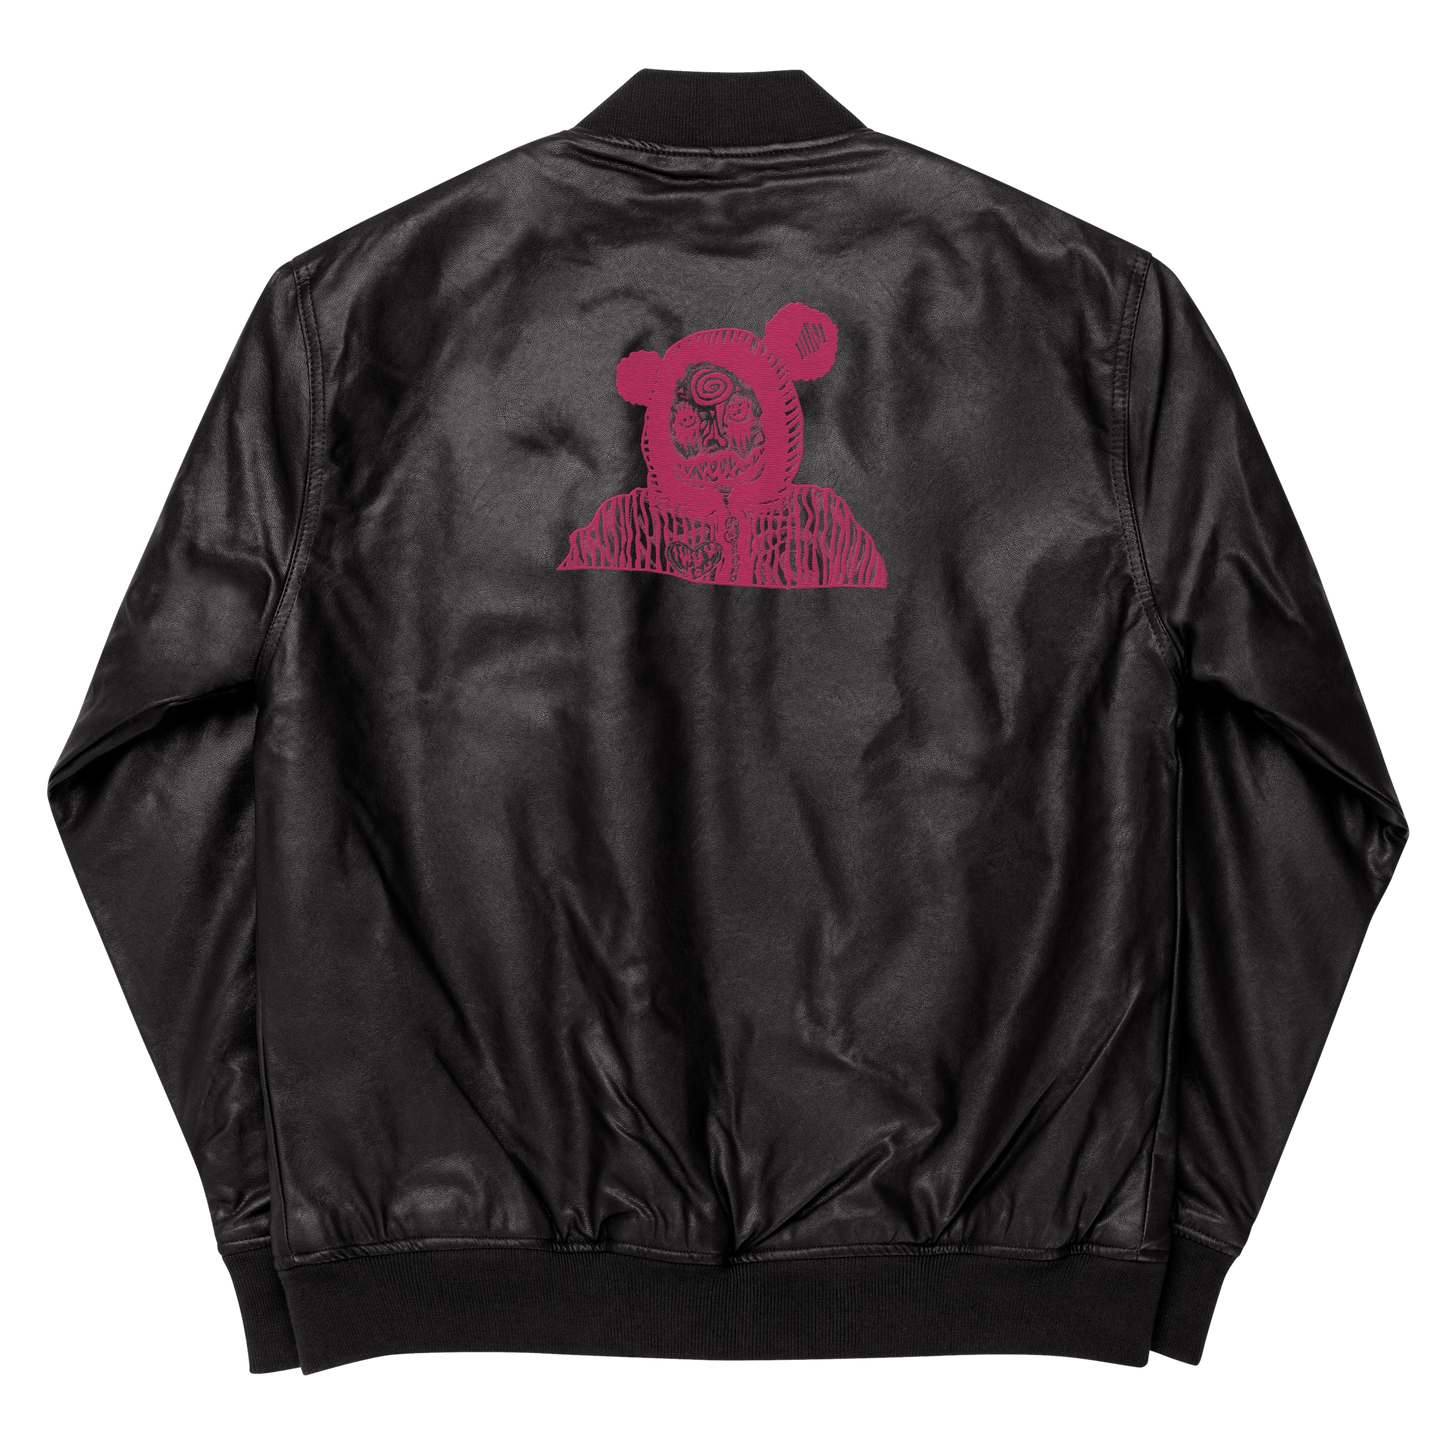 Wuv Bear in Pink on Black Jacket